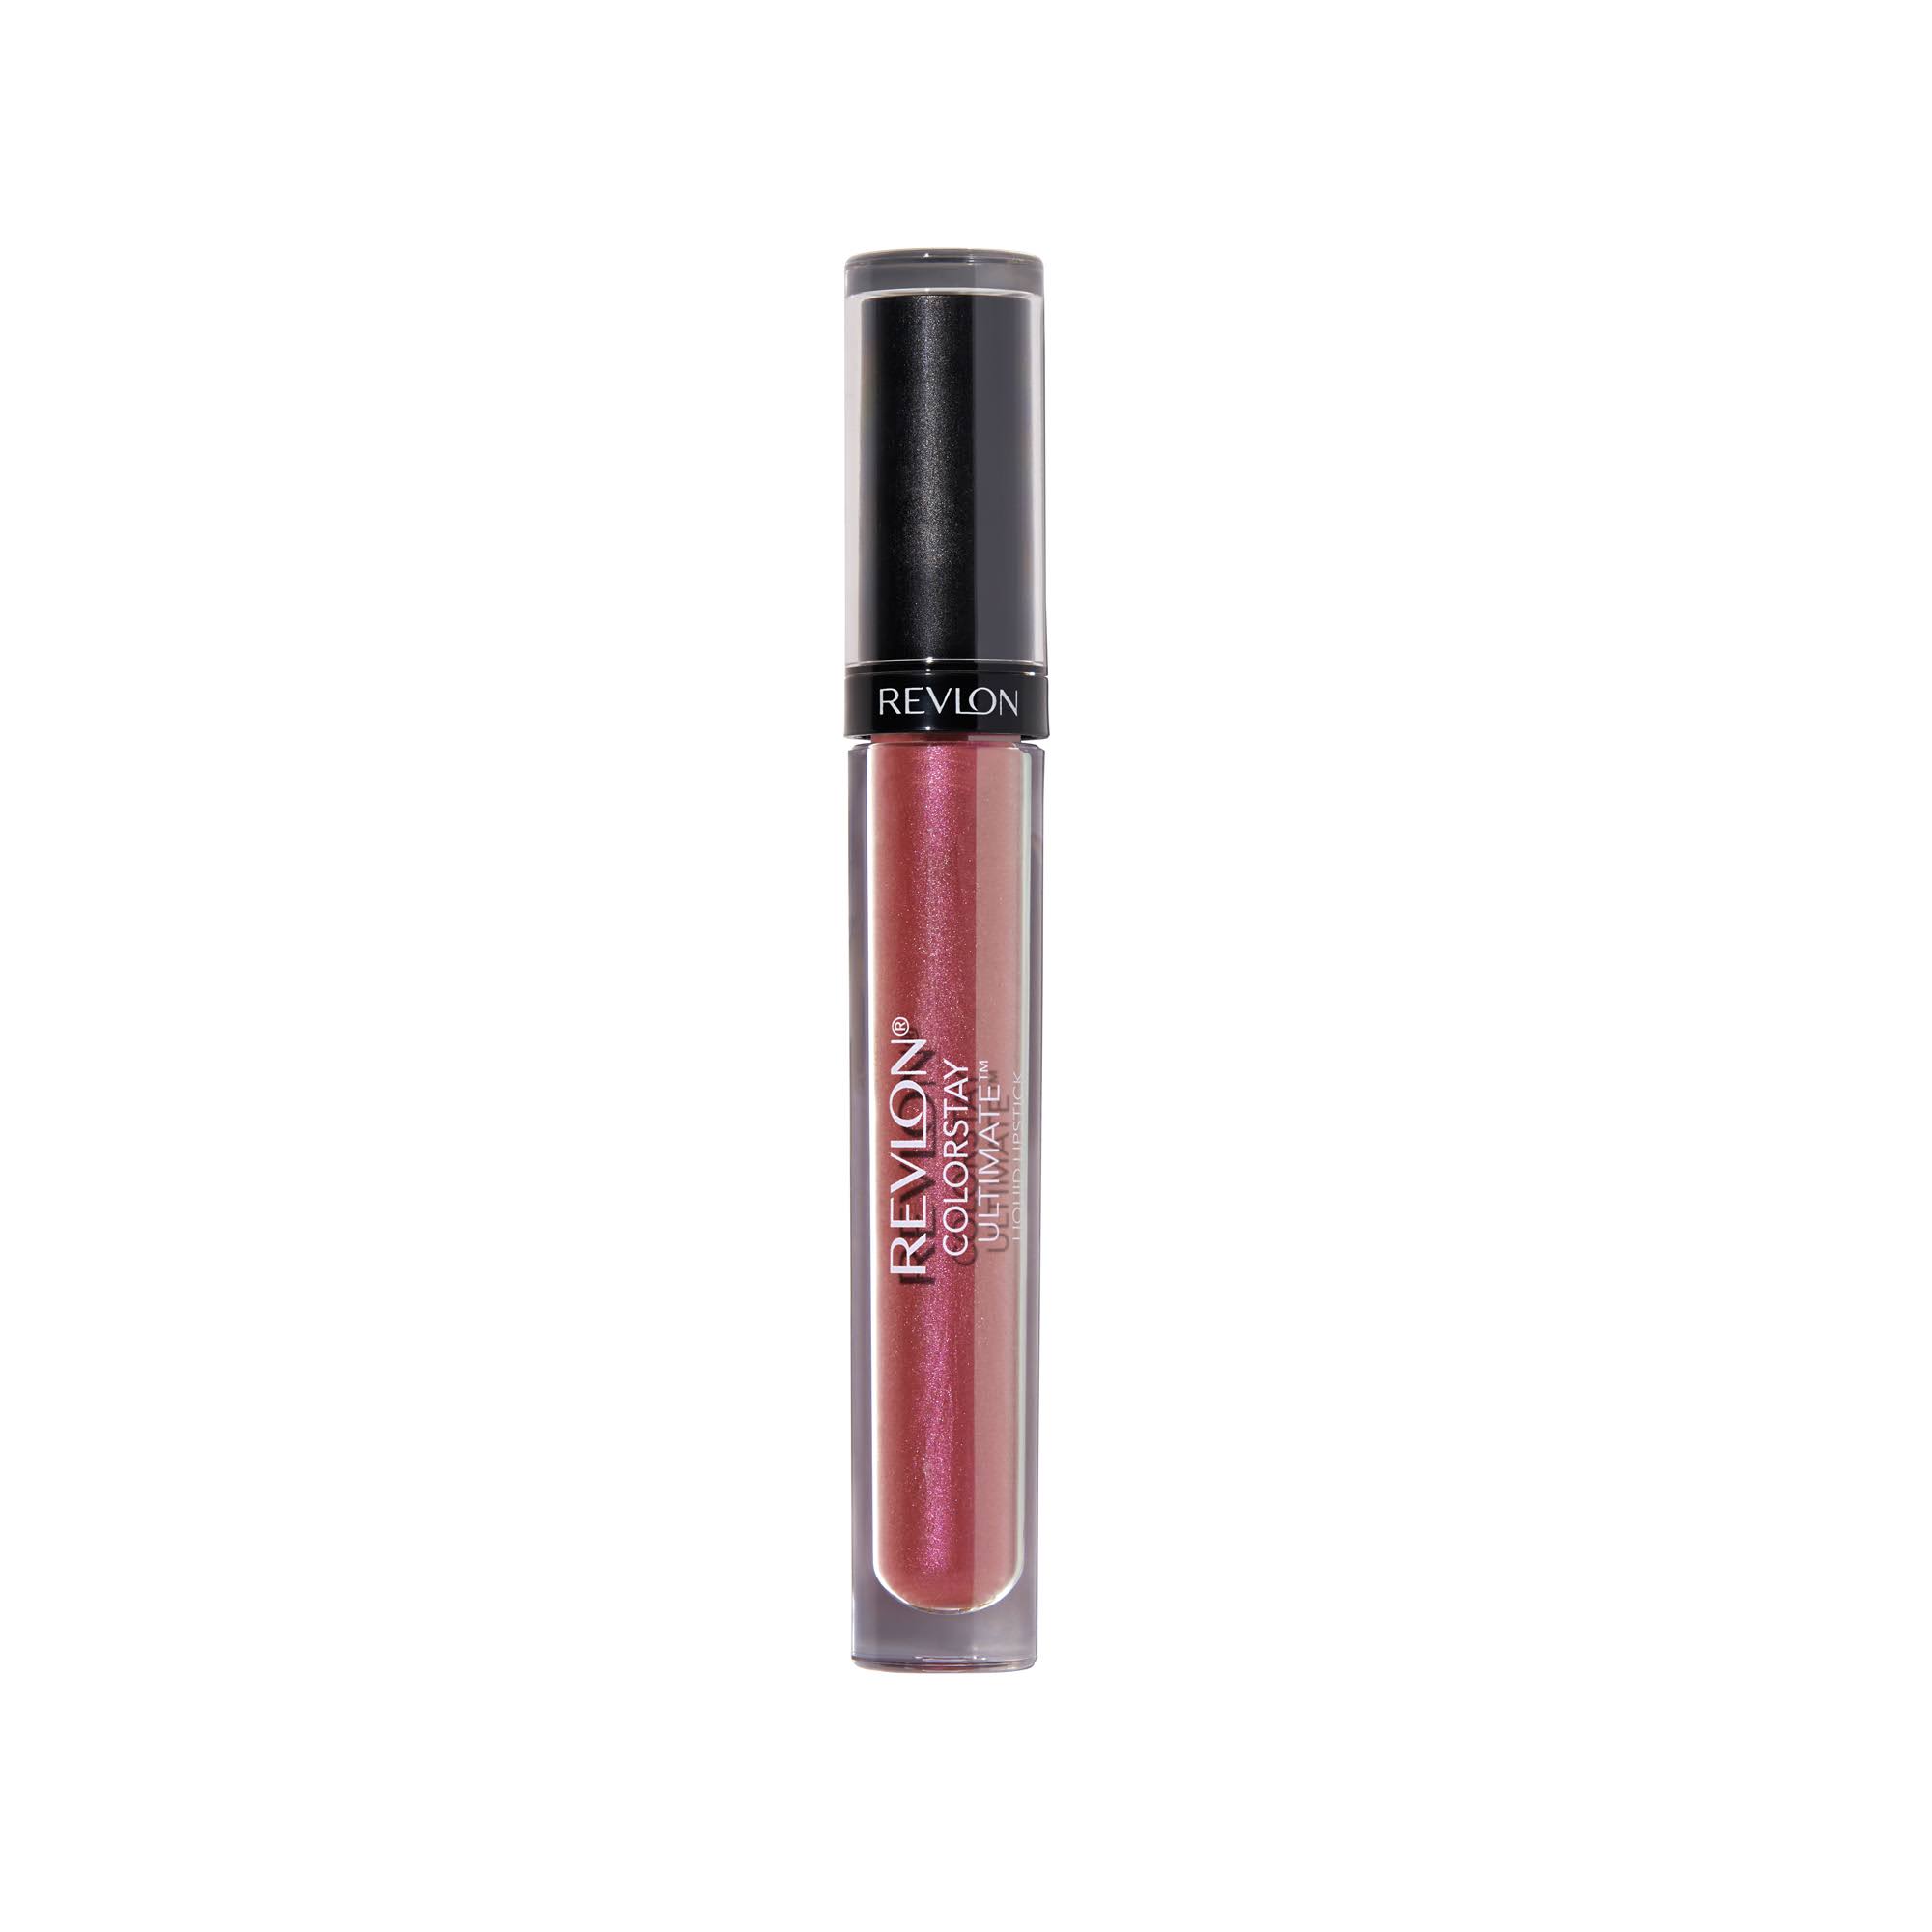 Revlon Colorstay Ultimate Liquid Lipstick - Miracle Mauve, 0.1oz